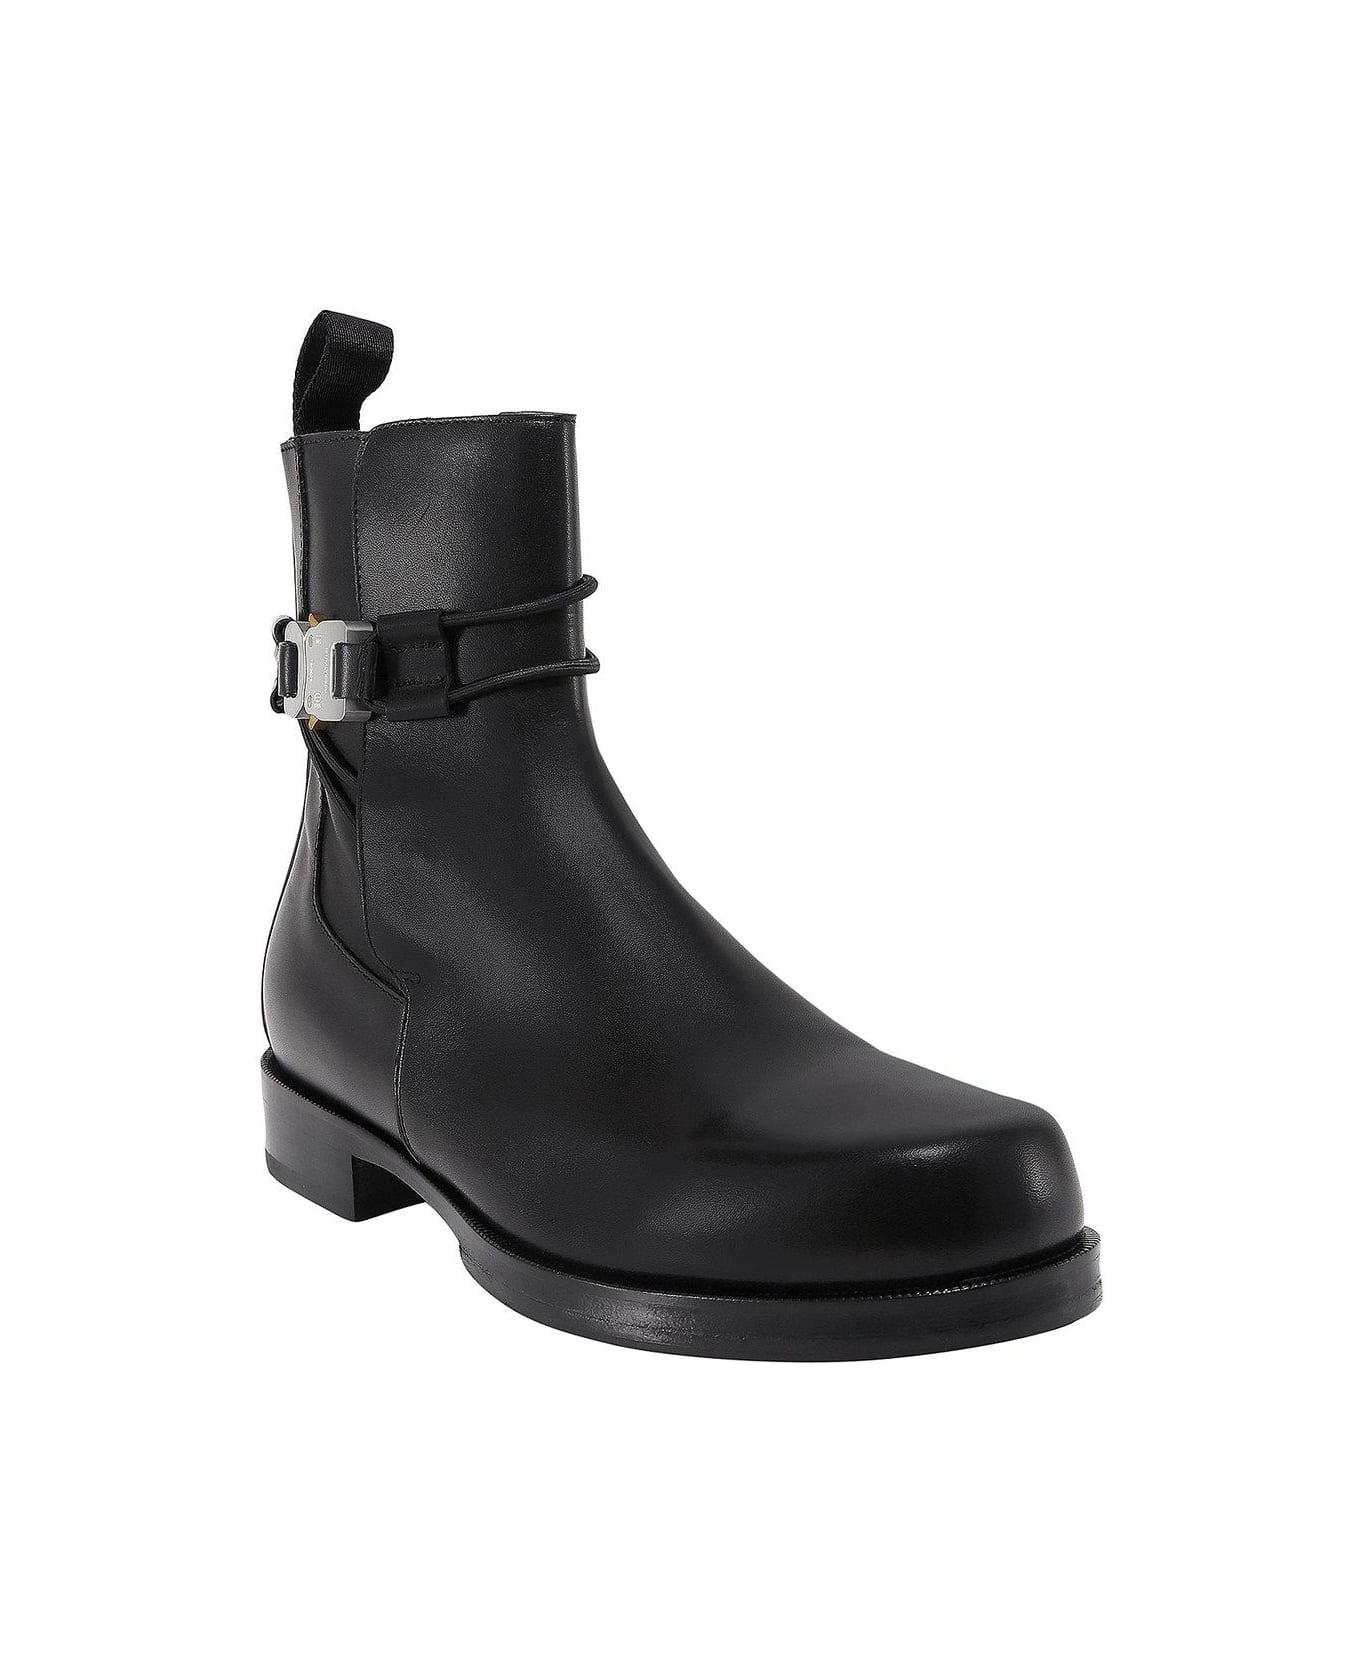 1017 ALYX 9SM Vibram Sole Chelsea Boots - Black